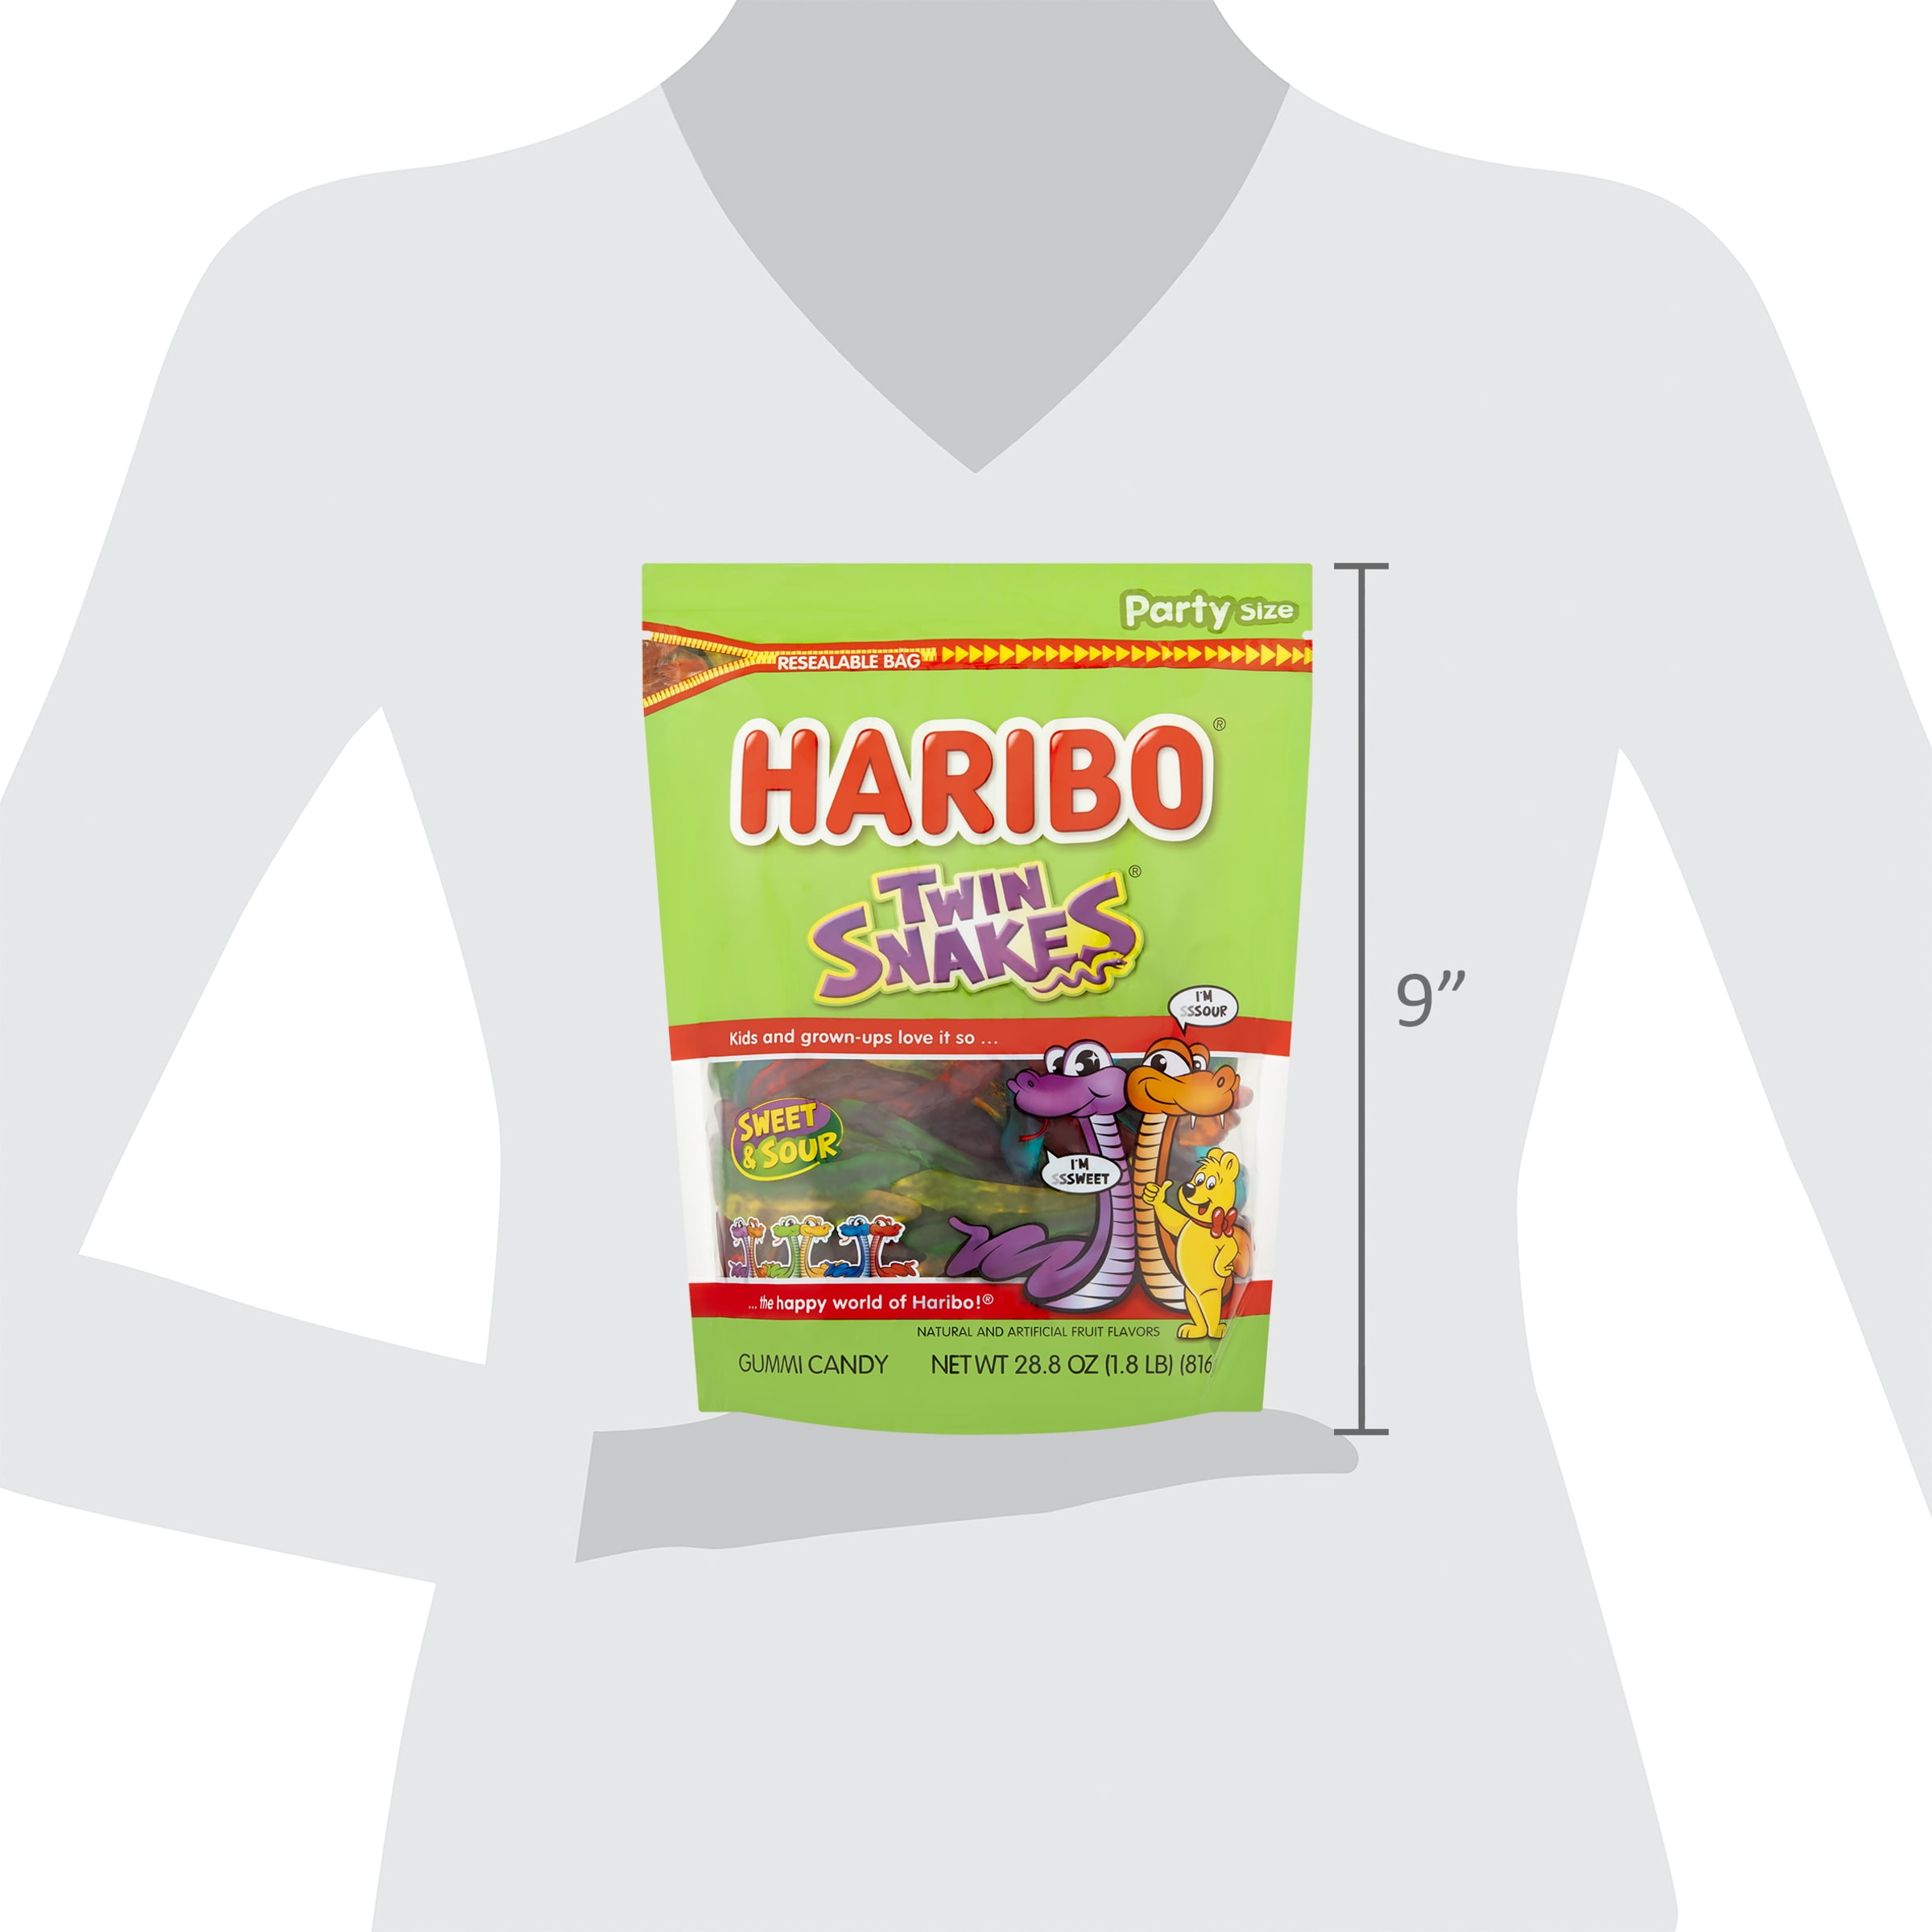 Haribo Sweet Mice 6.17 oz Bag